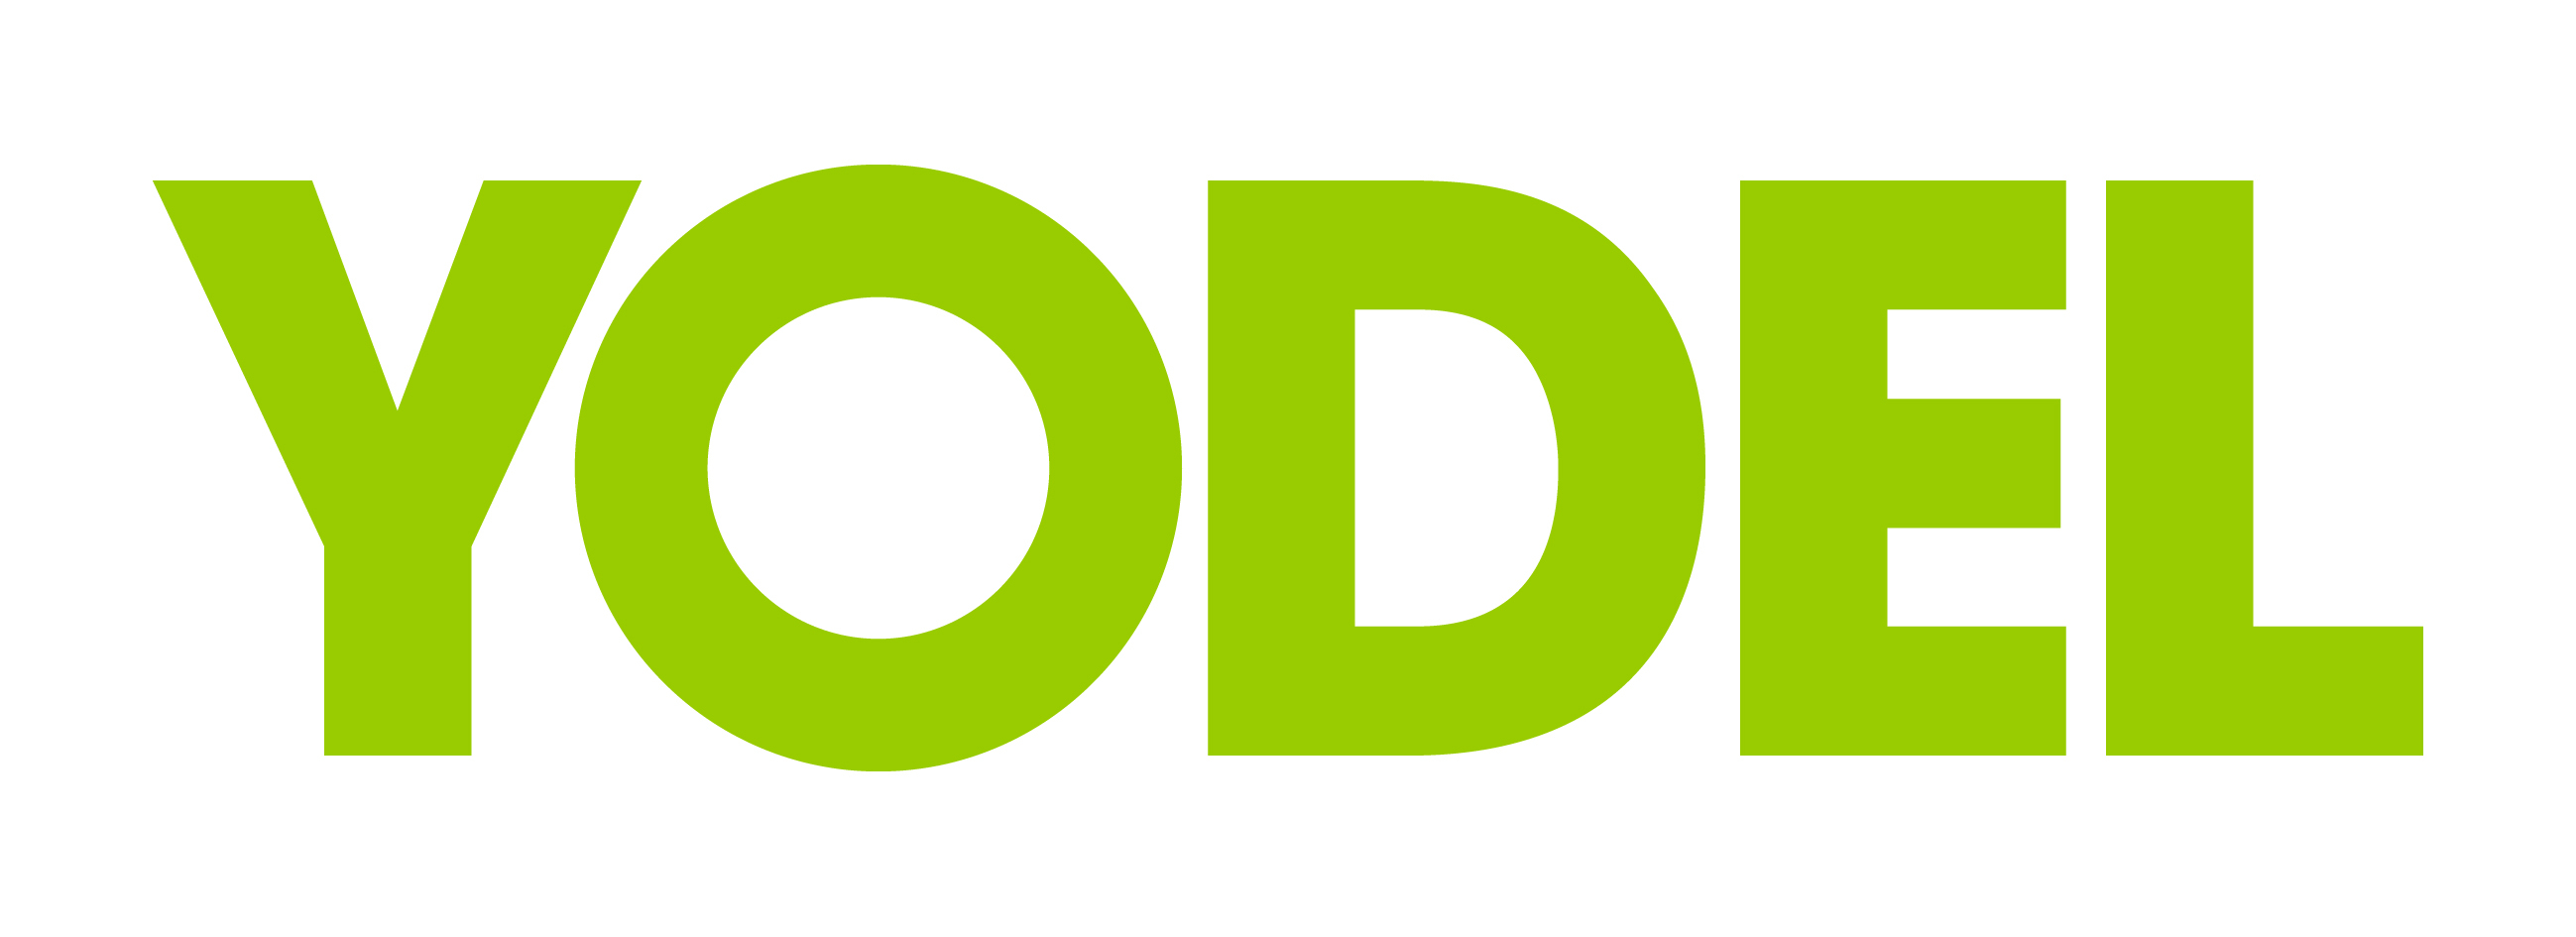 Yodel_Logo_green_RGB.JPG